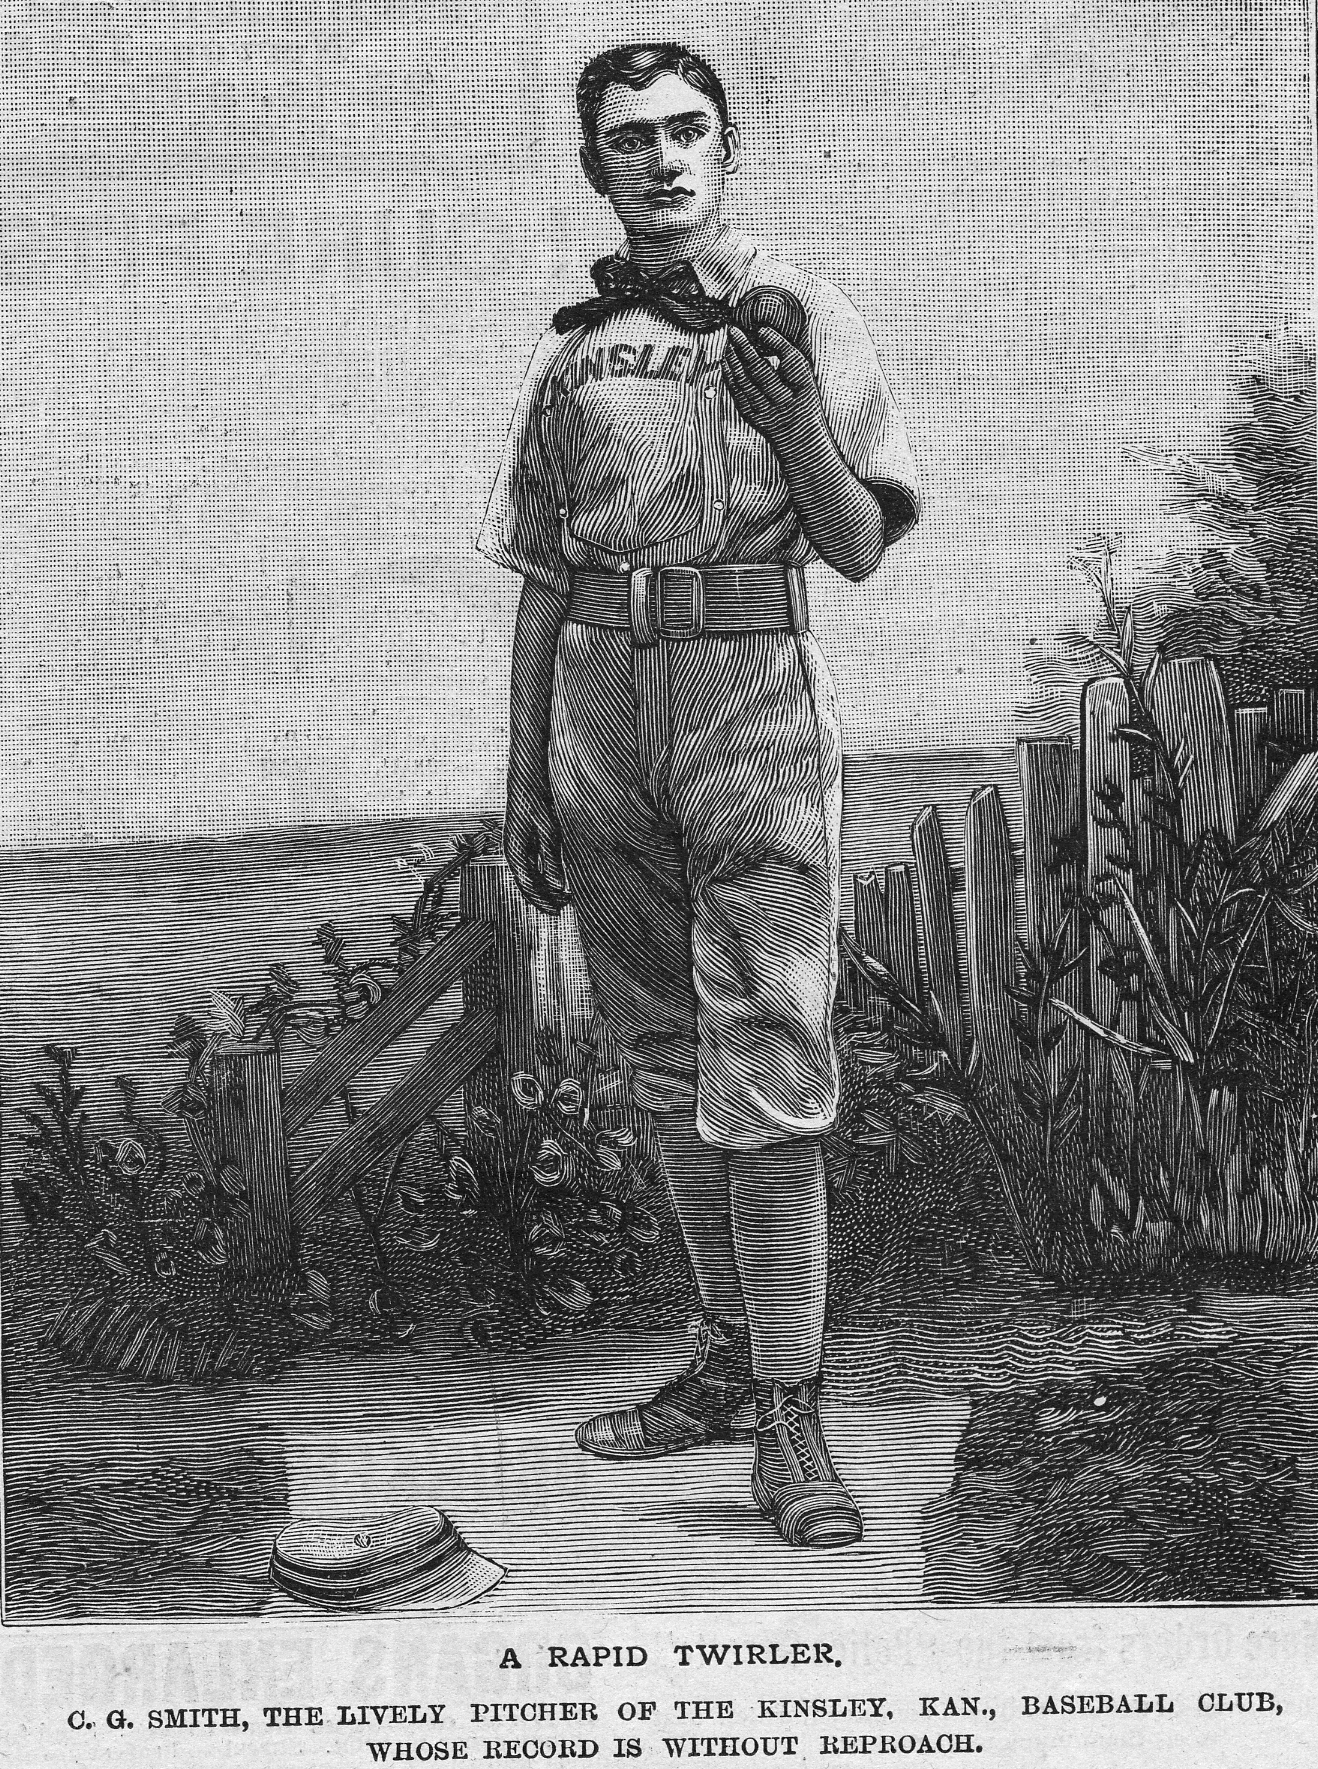 Baseball Player illustration